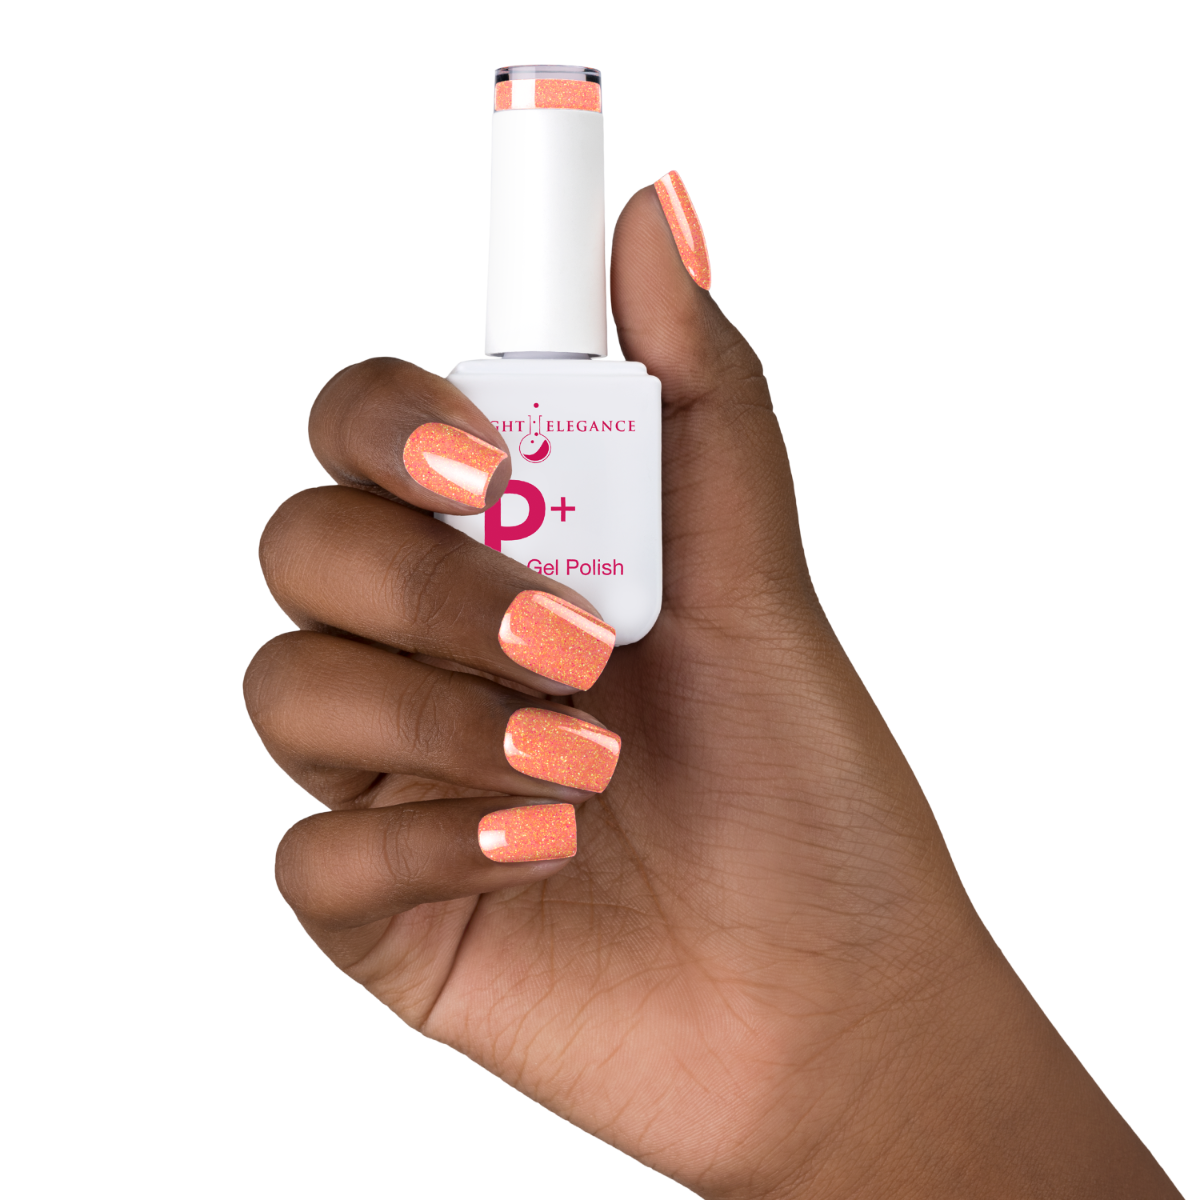 Light Elegance P+ Soak Off Glitter Gel - Orange Crush :: New Packaging - Creata Beauty - Professional Beauty Products